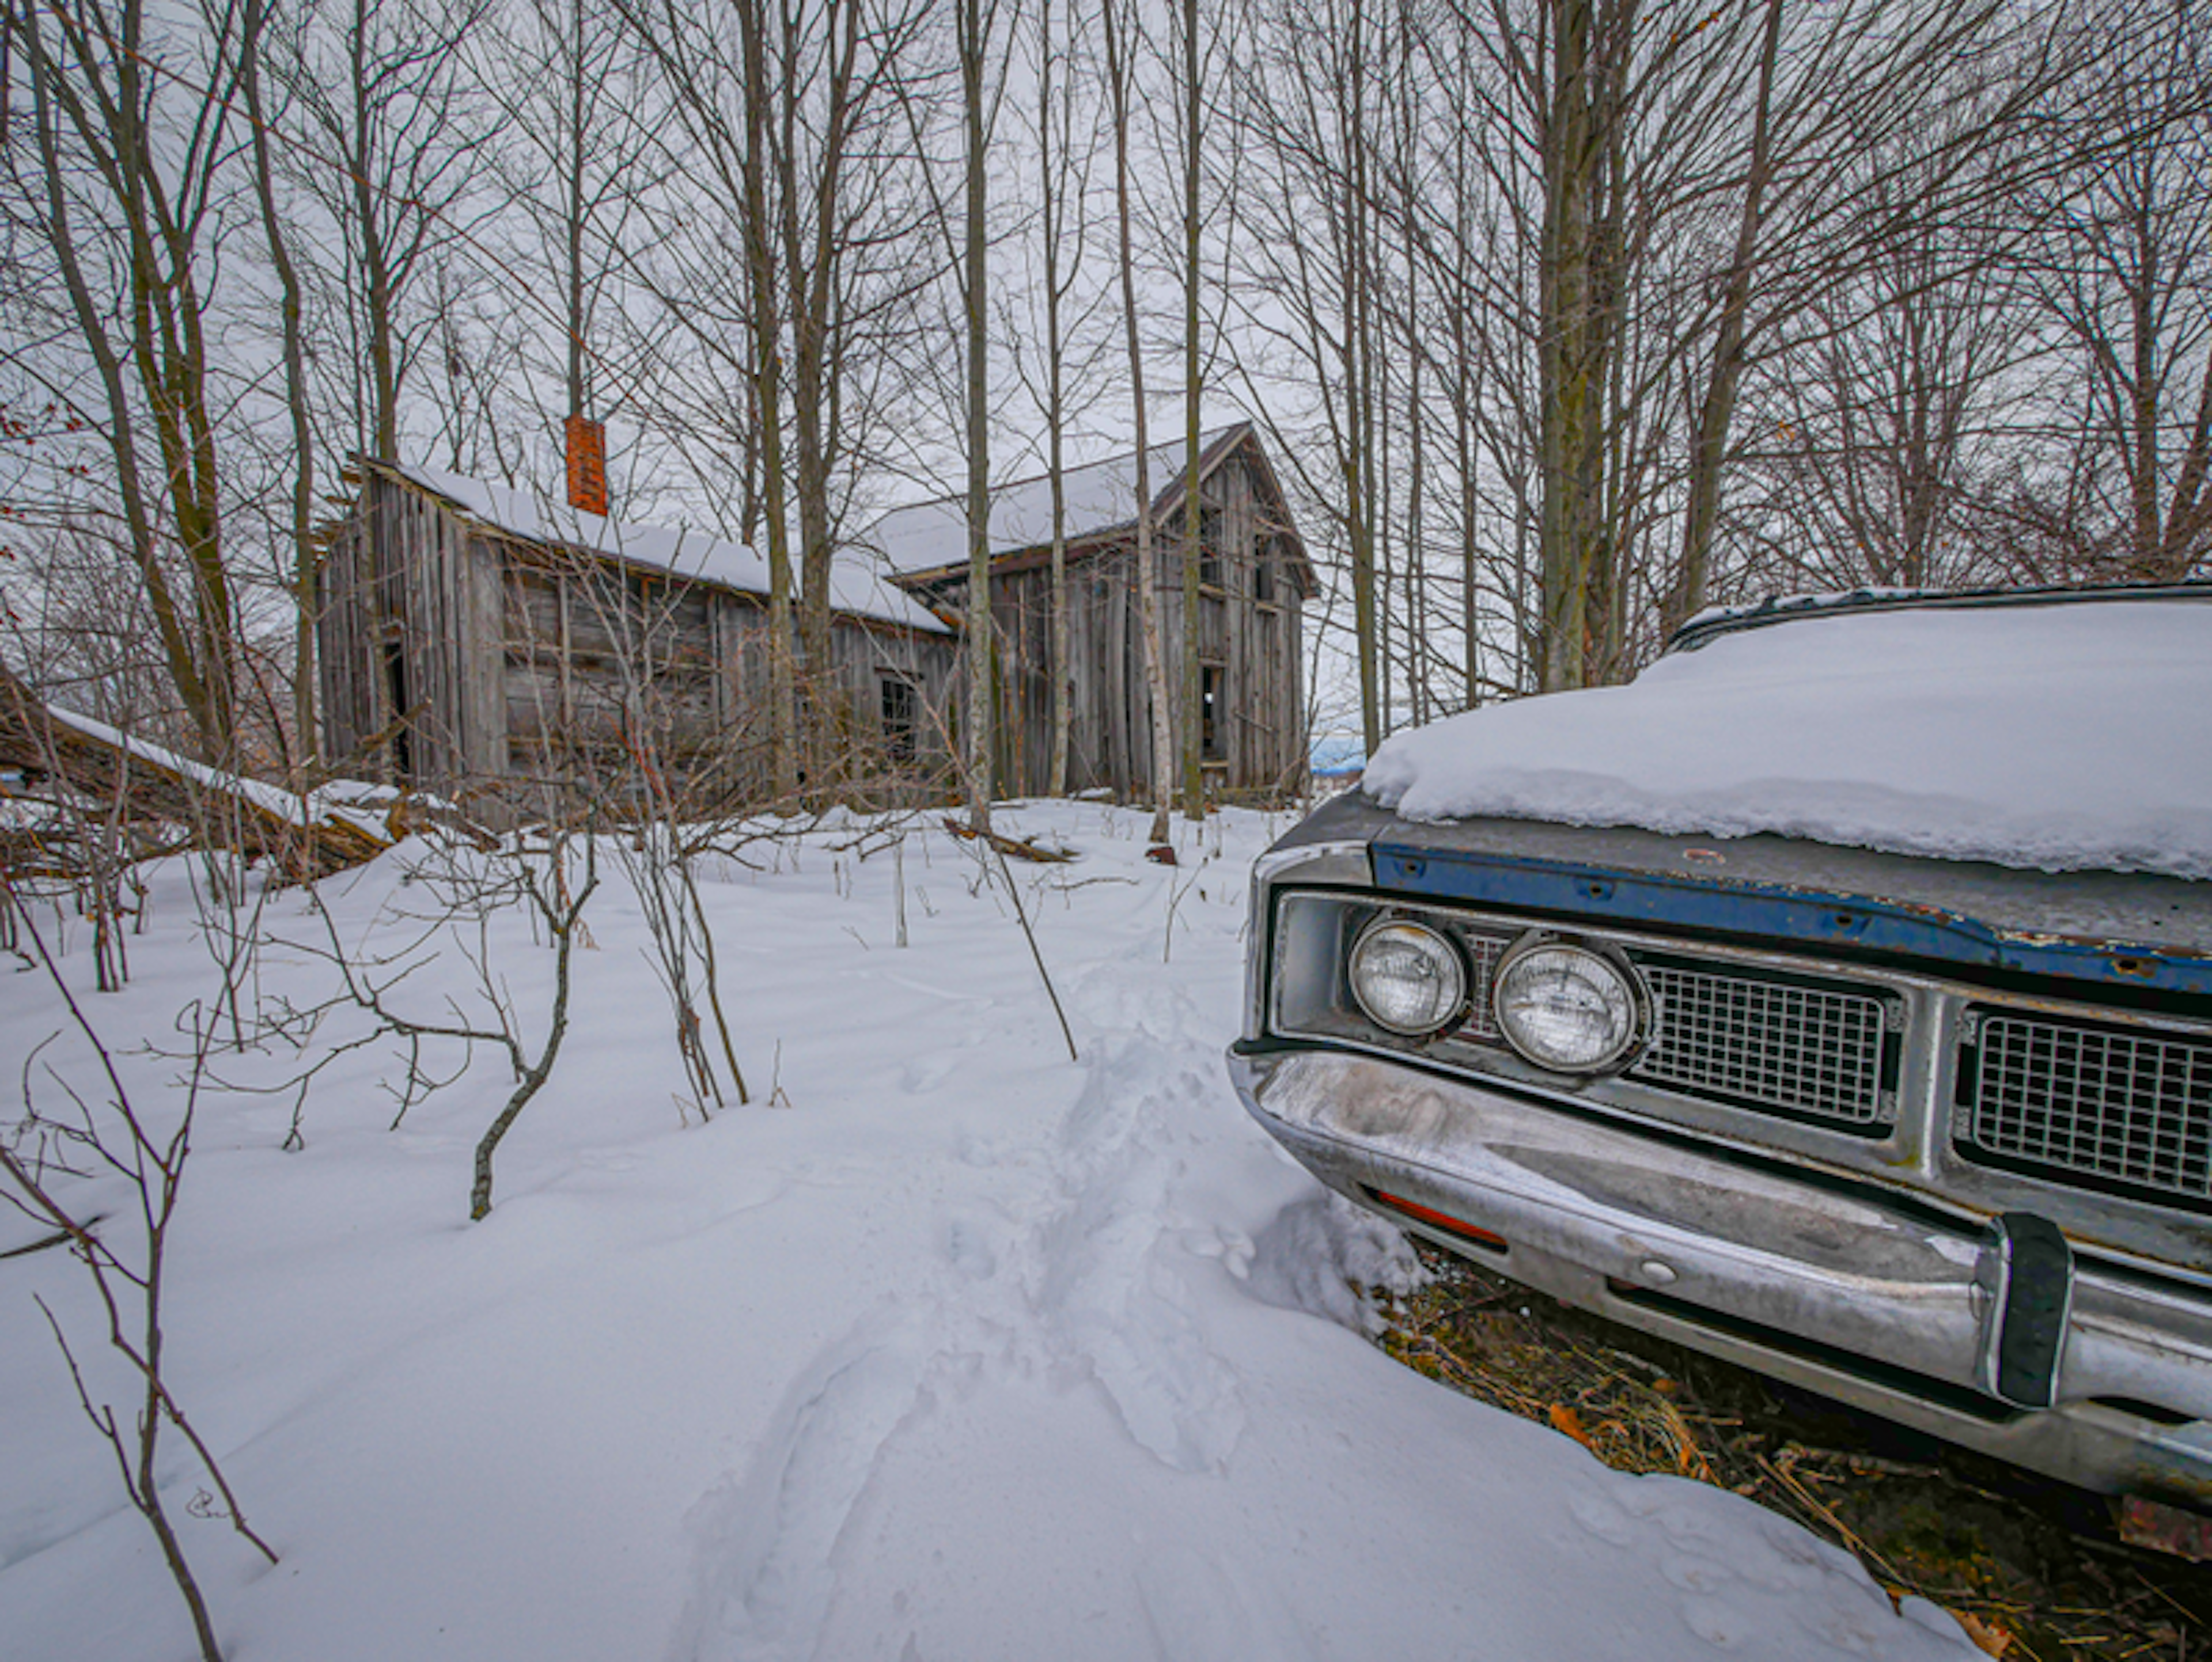 Abandoned Farmhouse with Blue Car